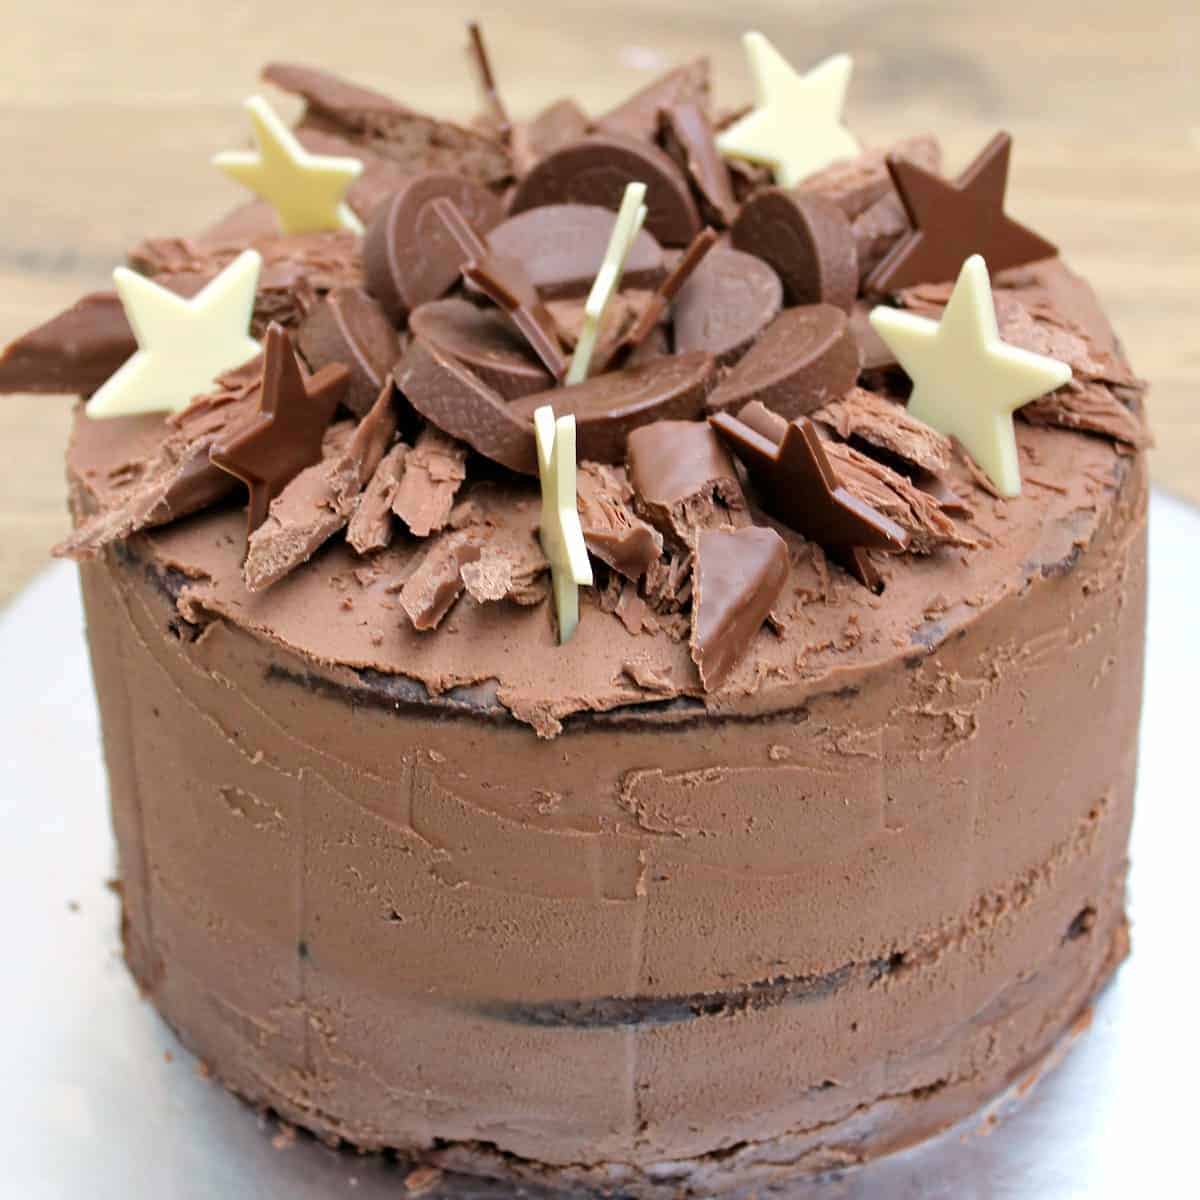 Decorated Chocolate Cake